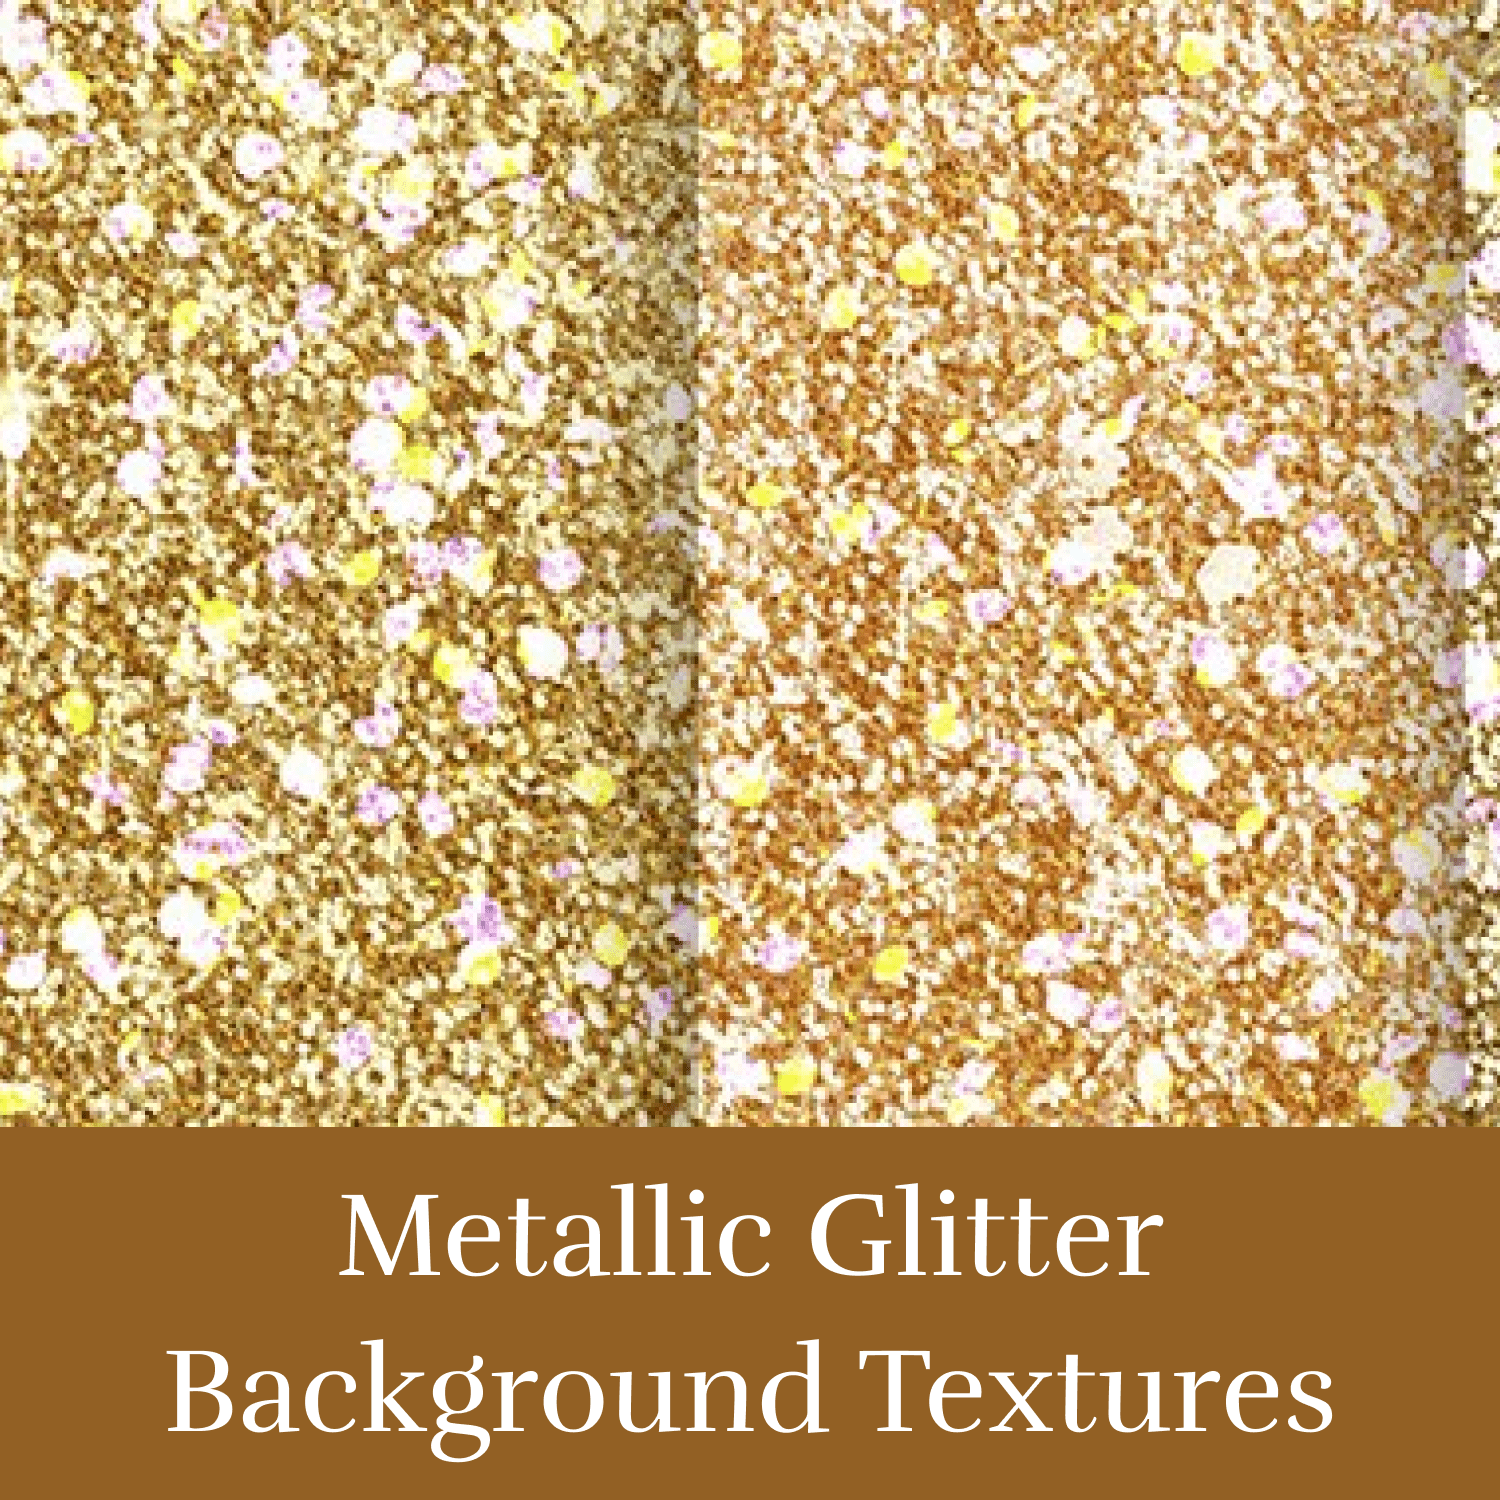 Metallic Glitter Background Textures cover.